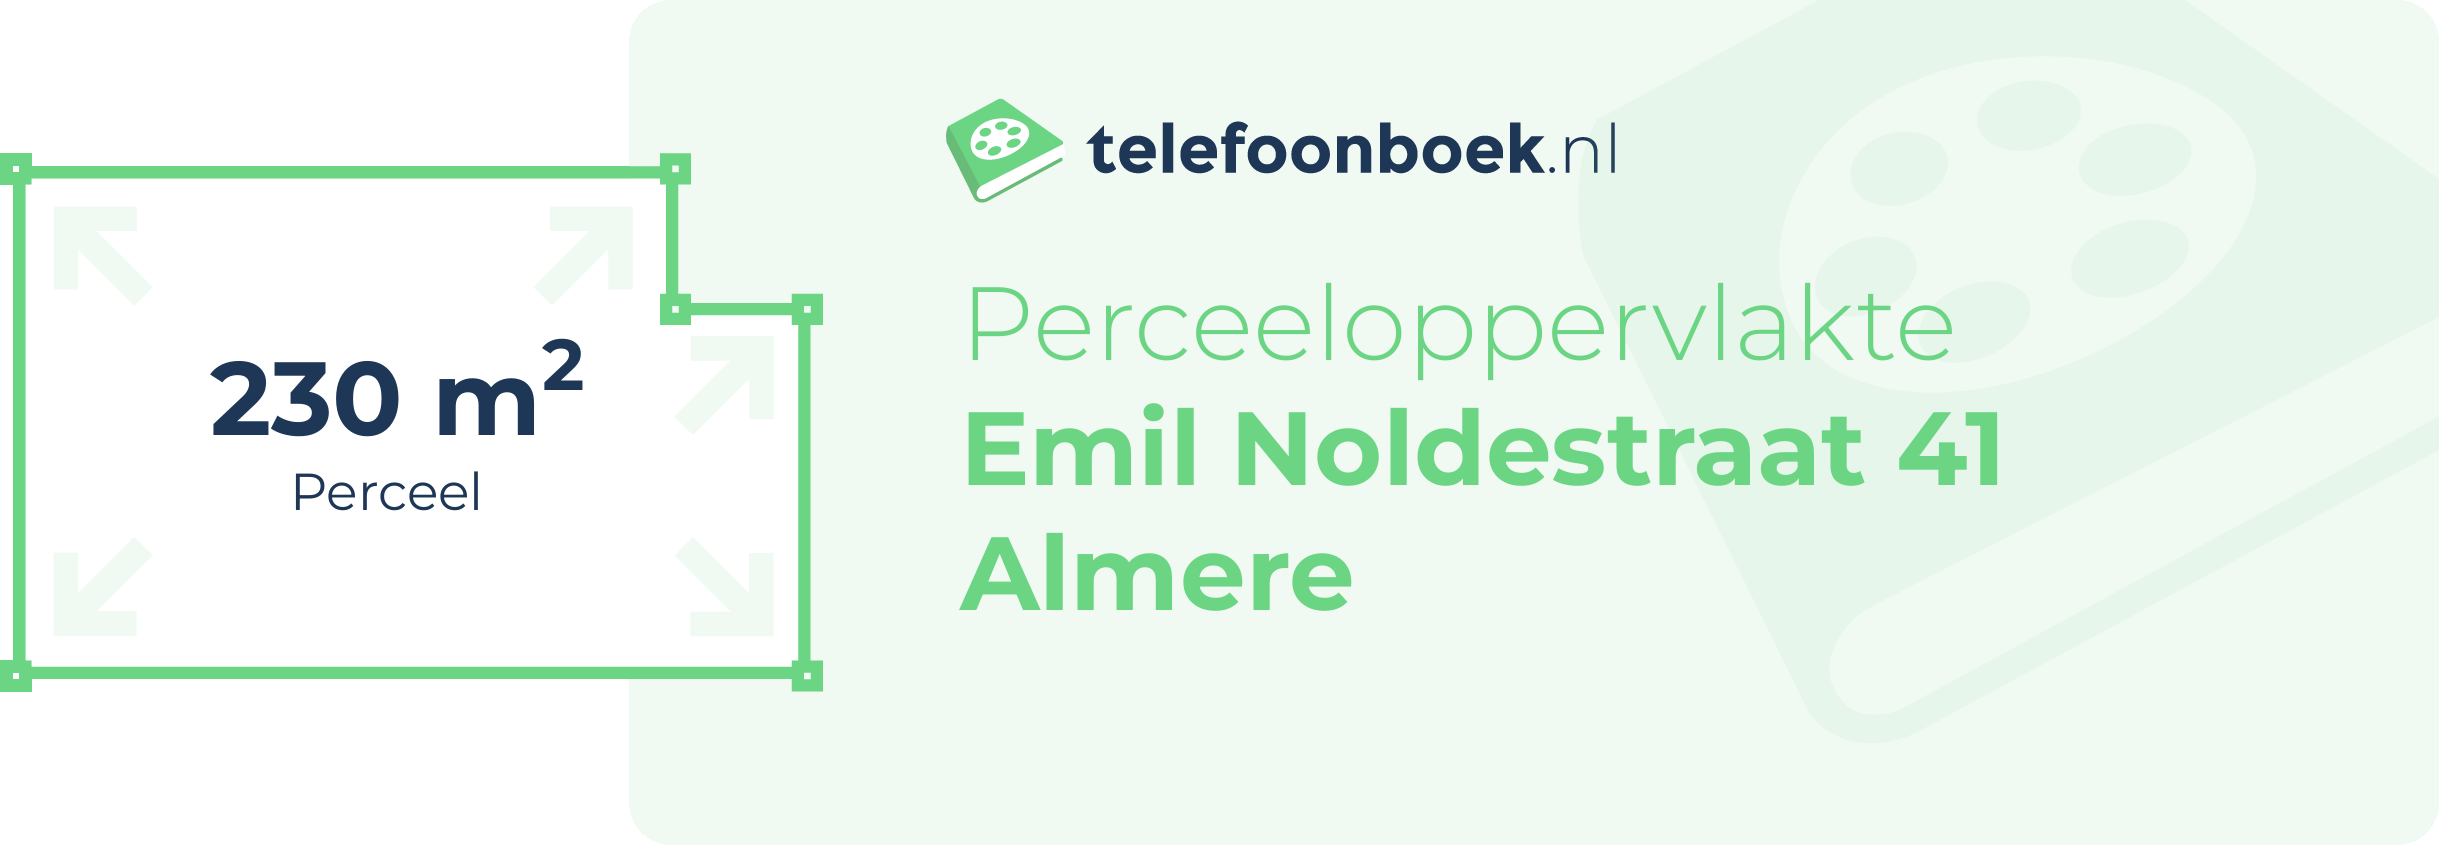 Perceeloppervlakte Emil Noldestraat 41 Almere